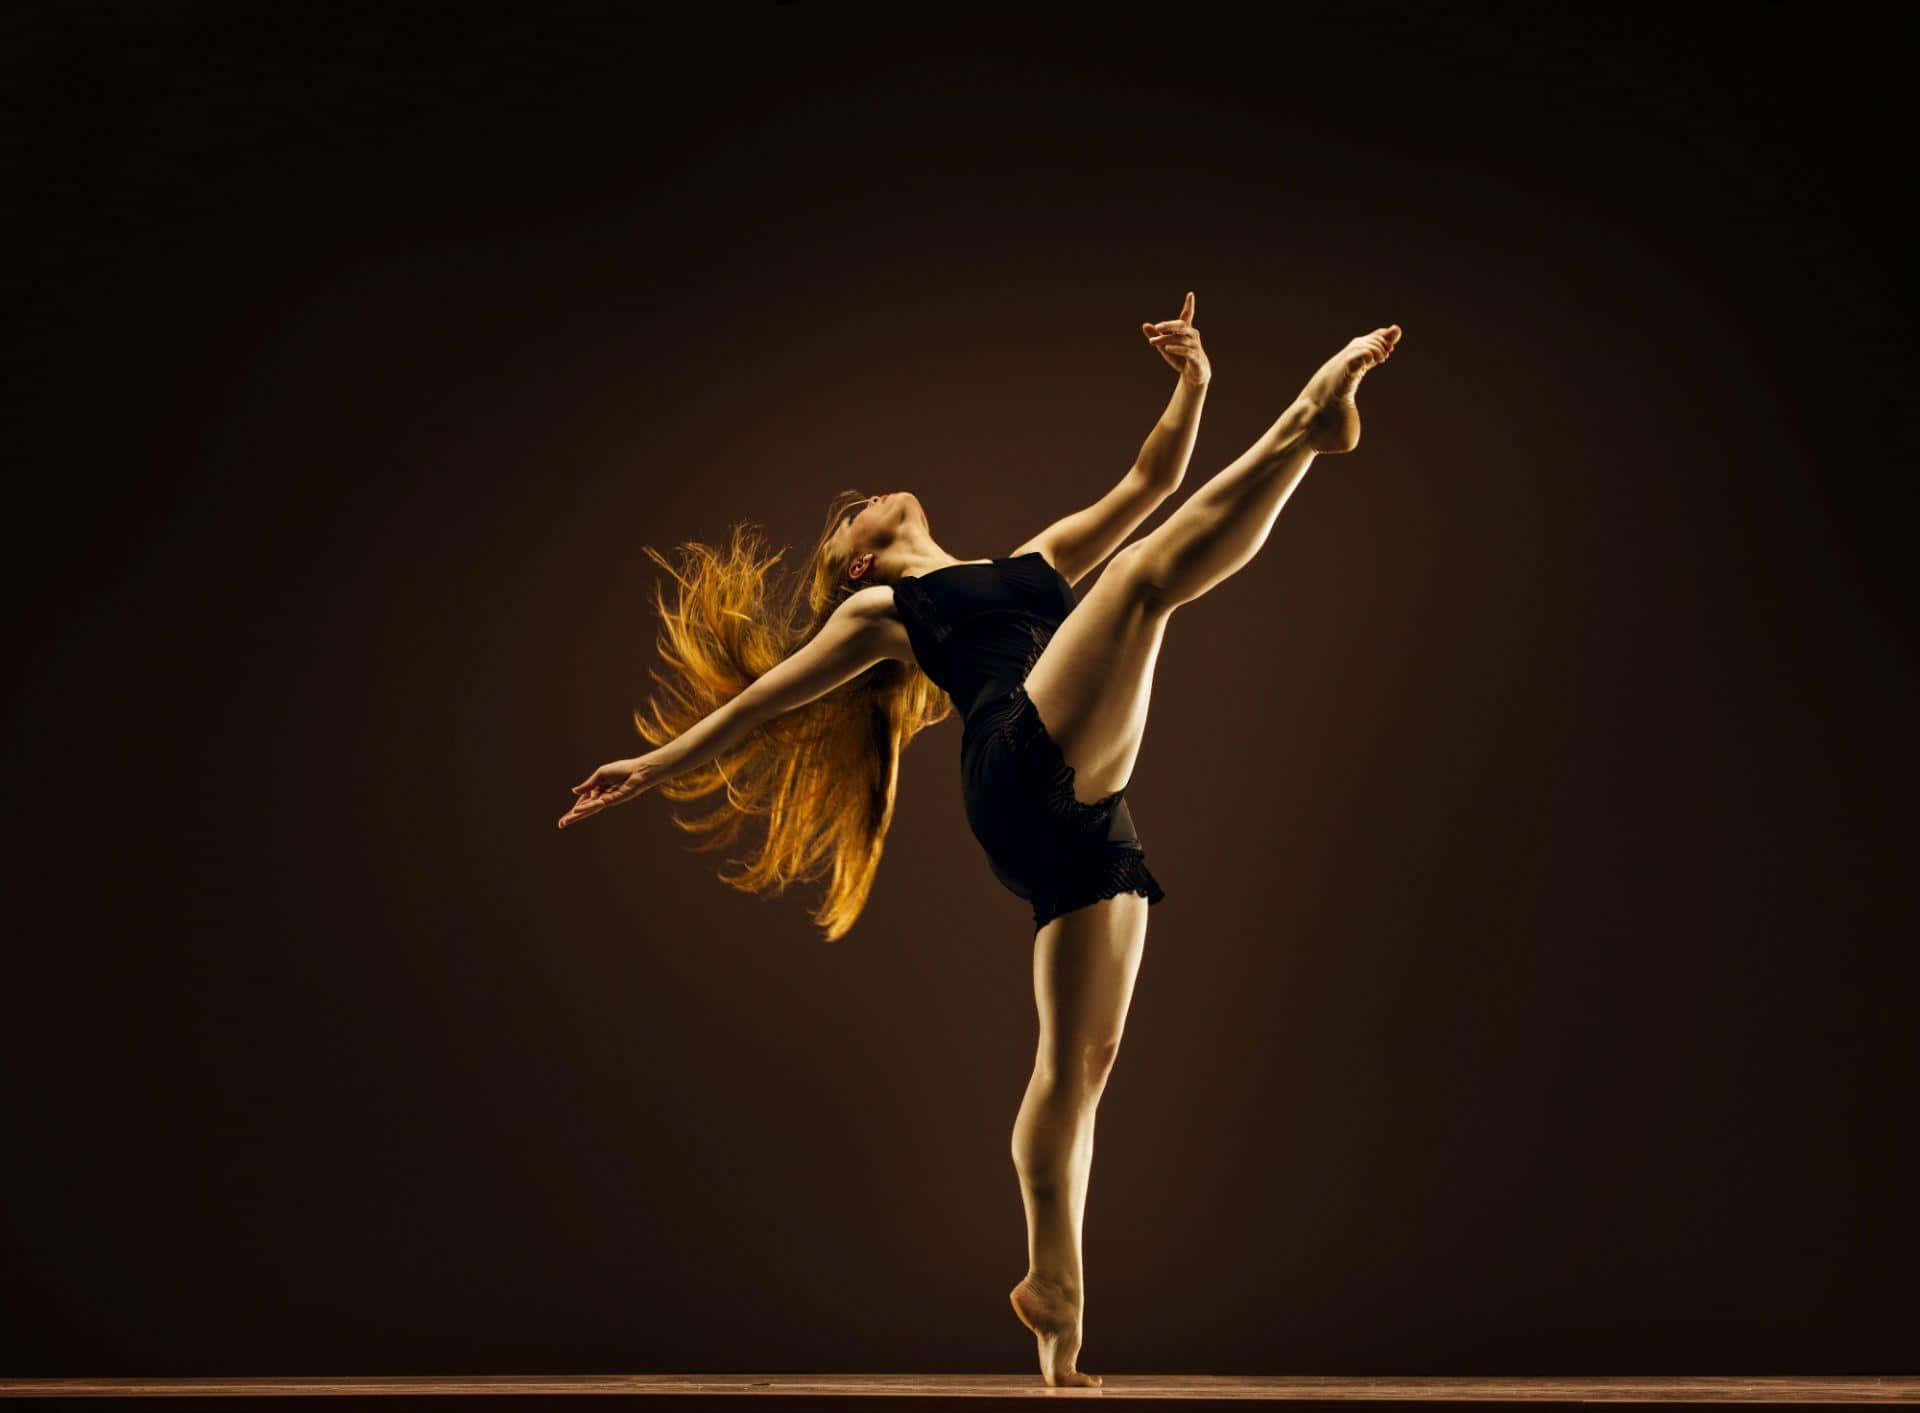 A graceful ballerina in full costume glides atop a ballet studio dance floor